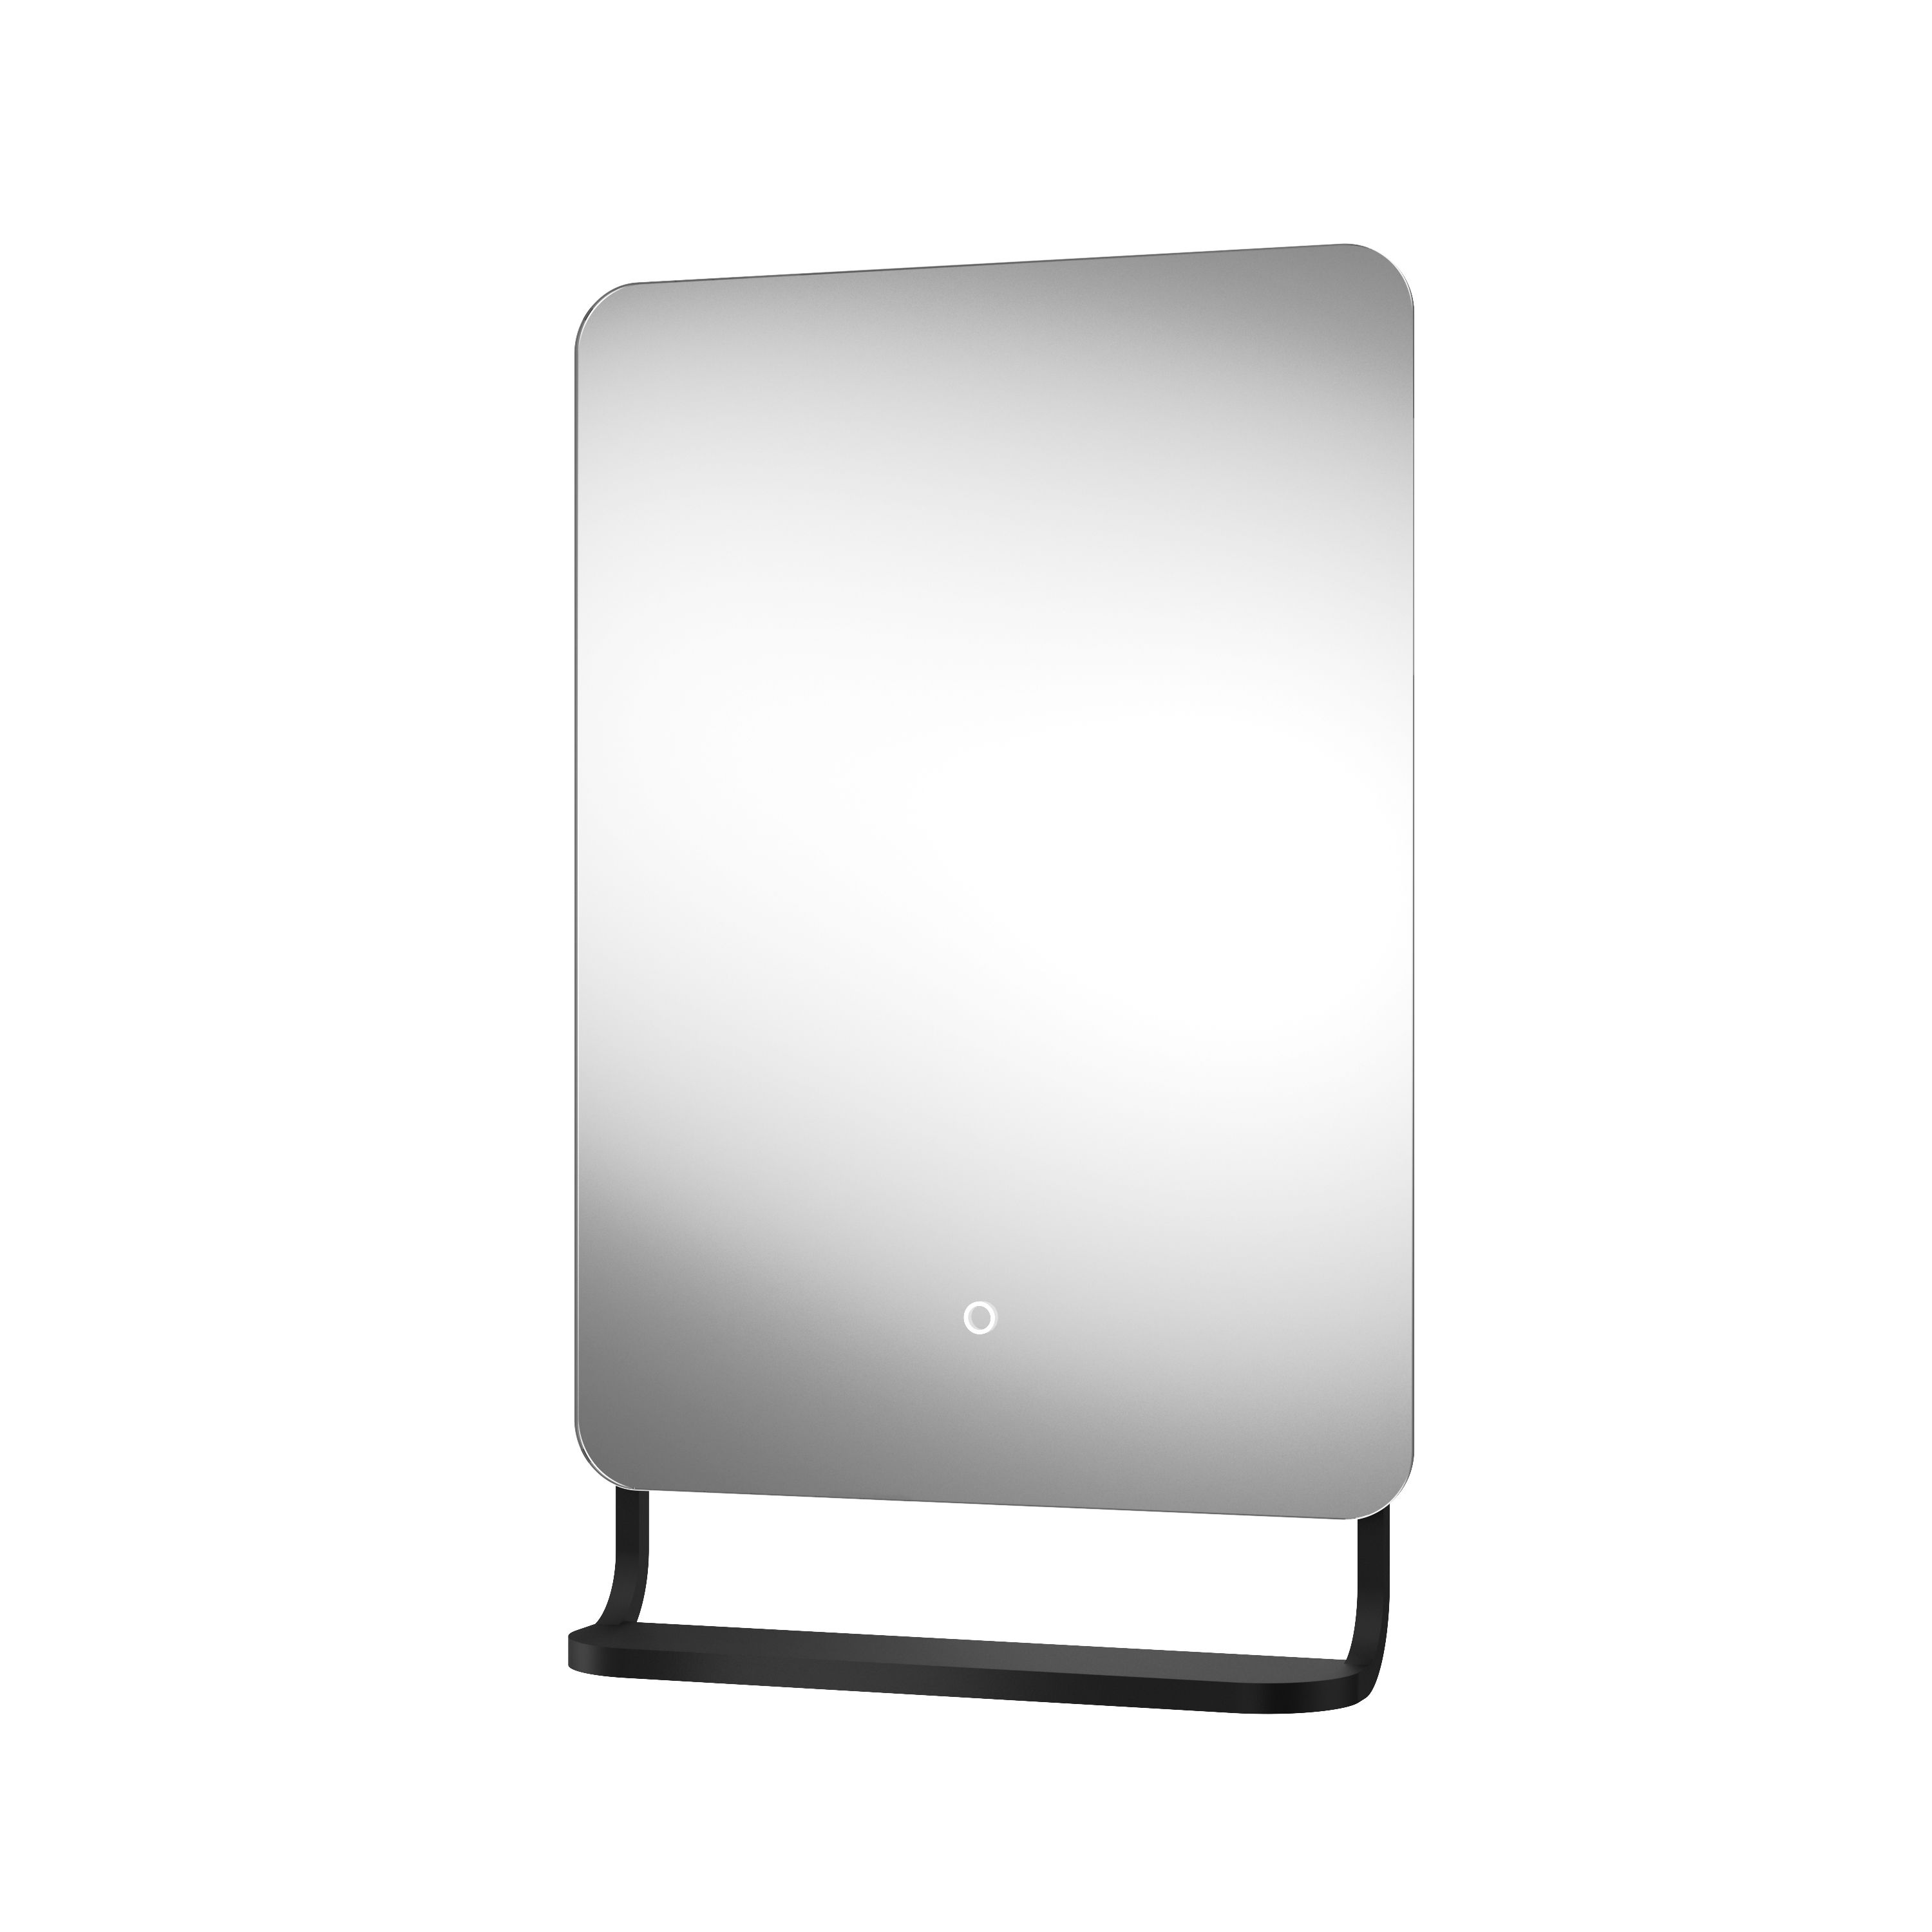 Sensio Harbour Matt Black Rectangular Wall-mounted Bathroom Illuminated Colour-changing mirror (H)79cm (W)50cm